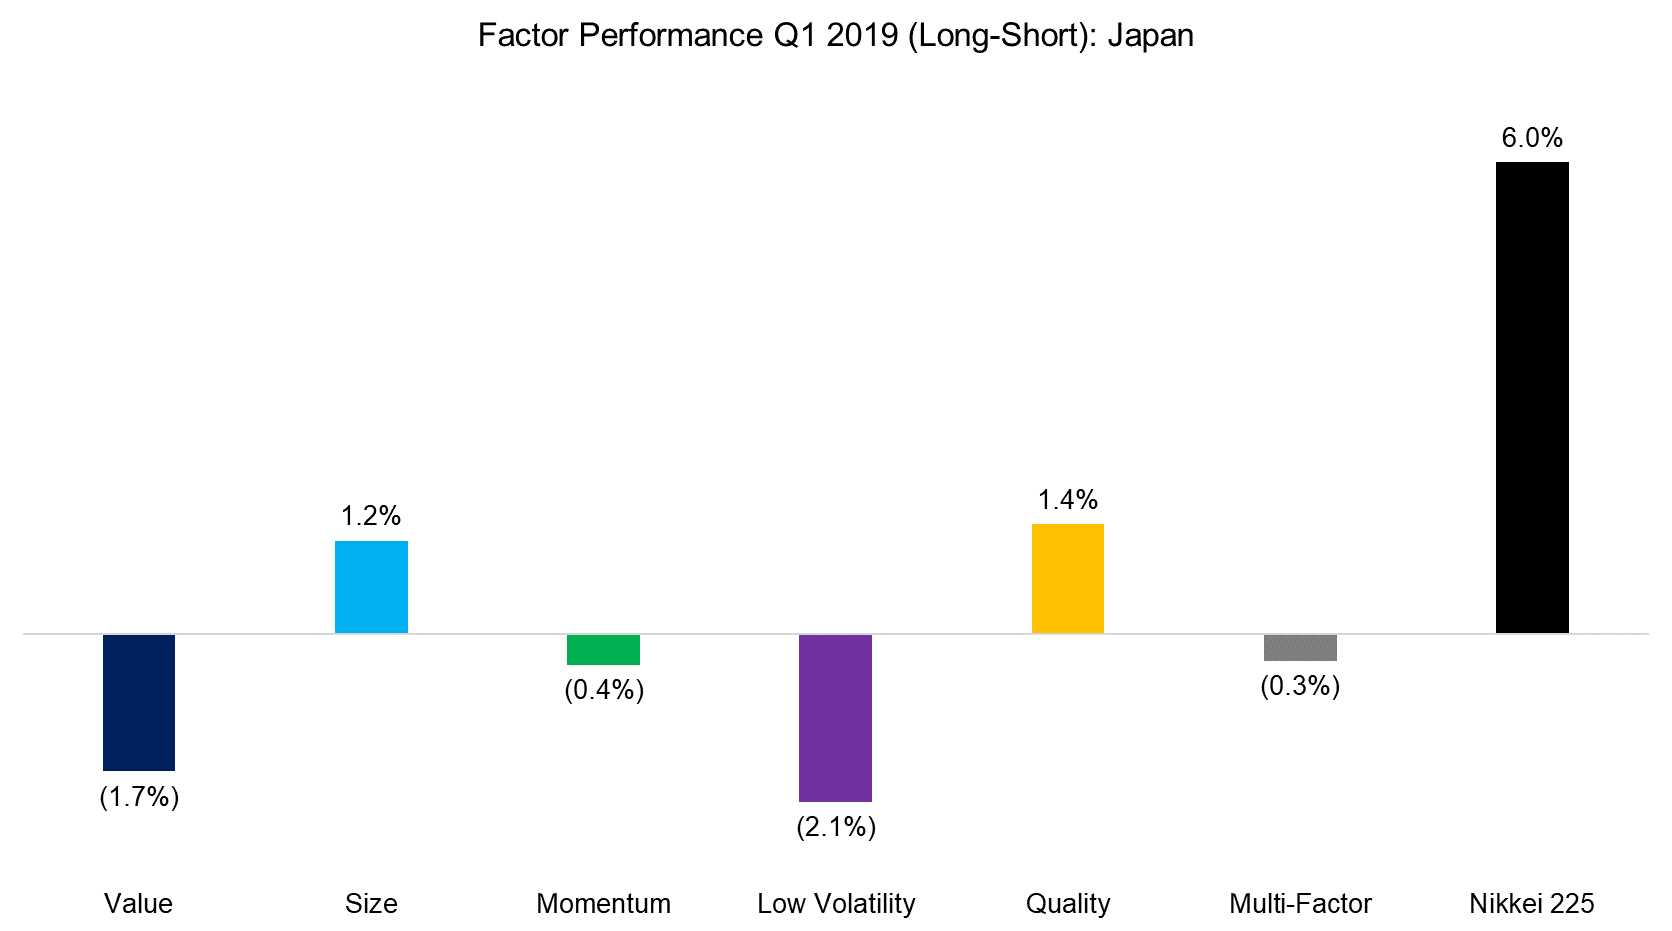 Factor Performance Q1 2019 (Long-Short) Japan